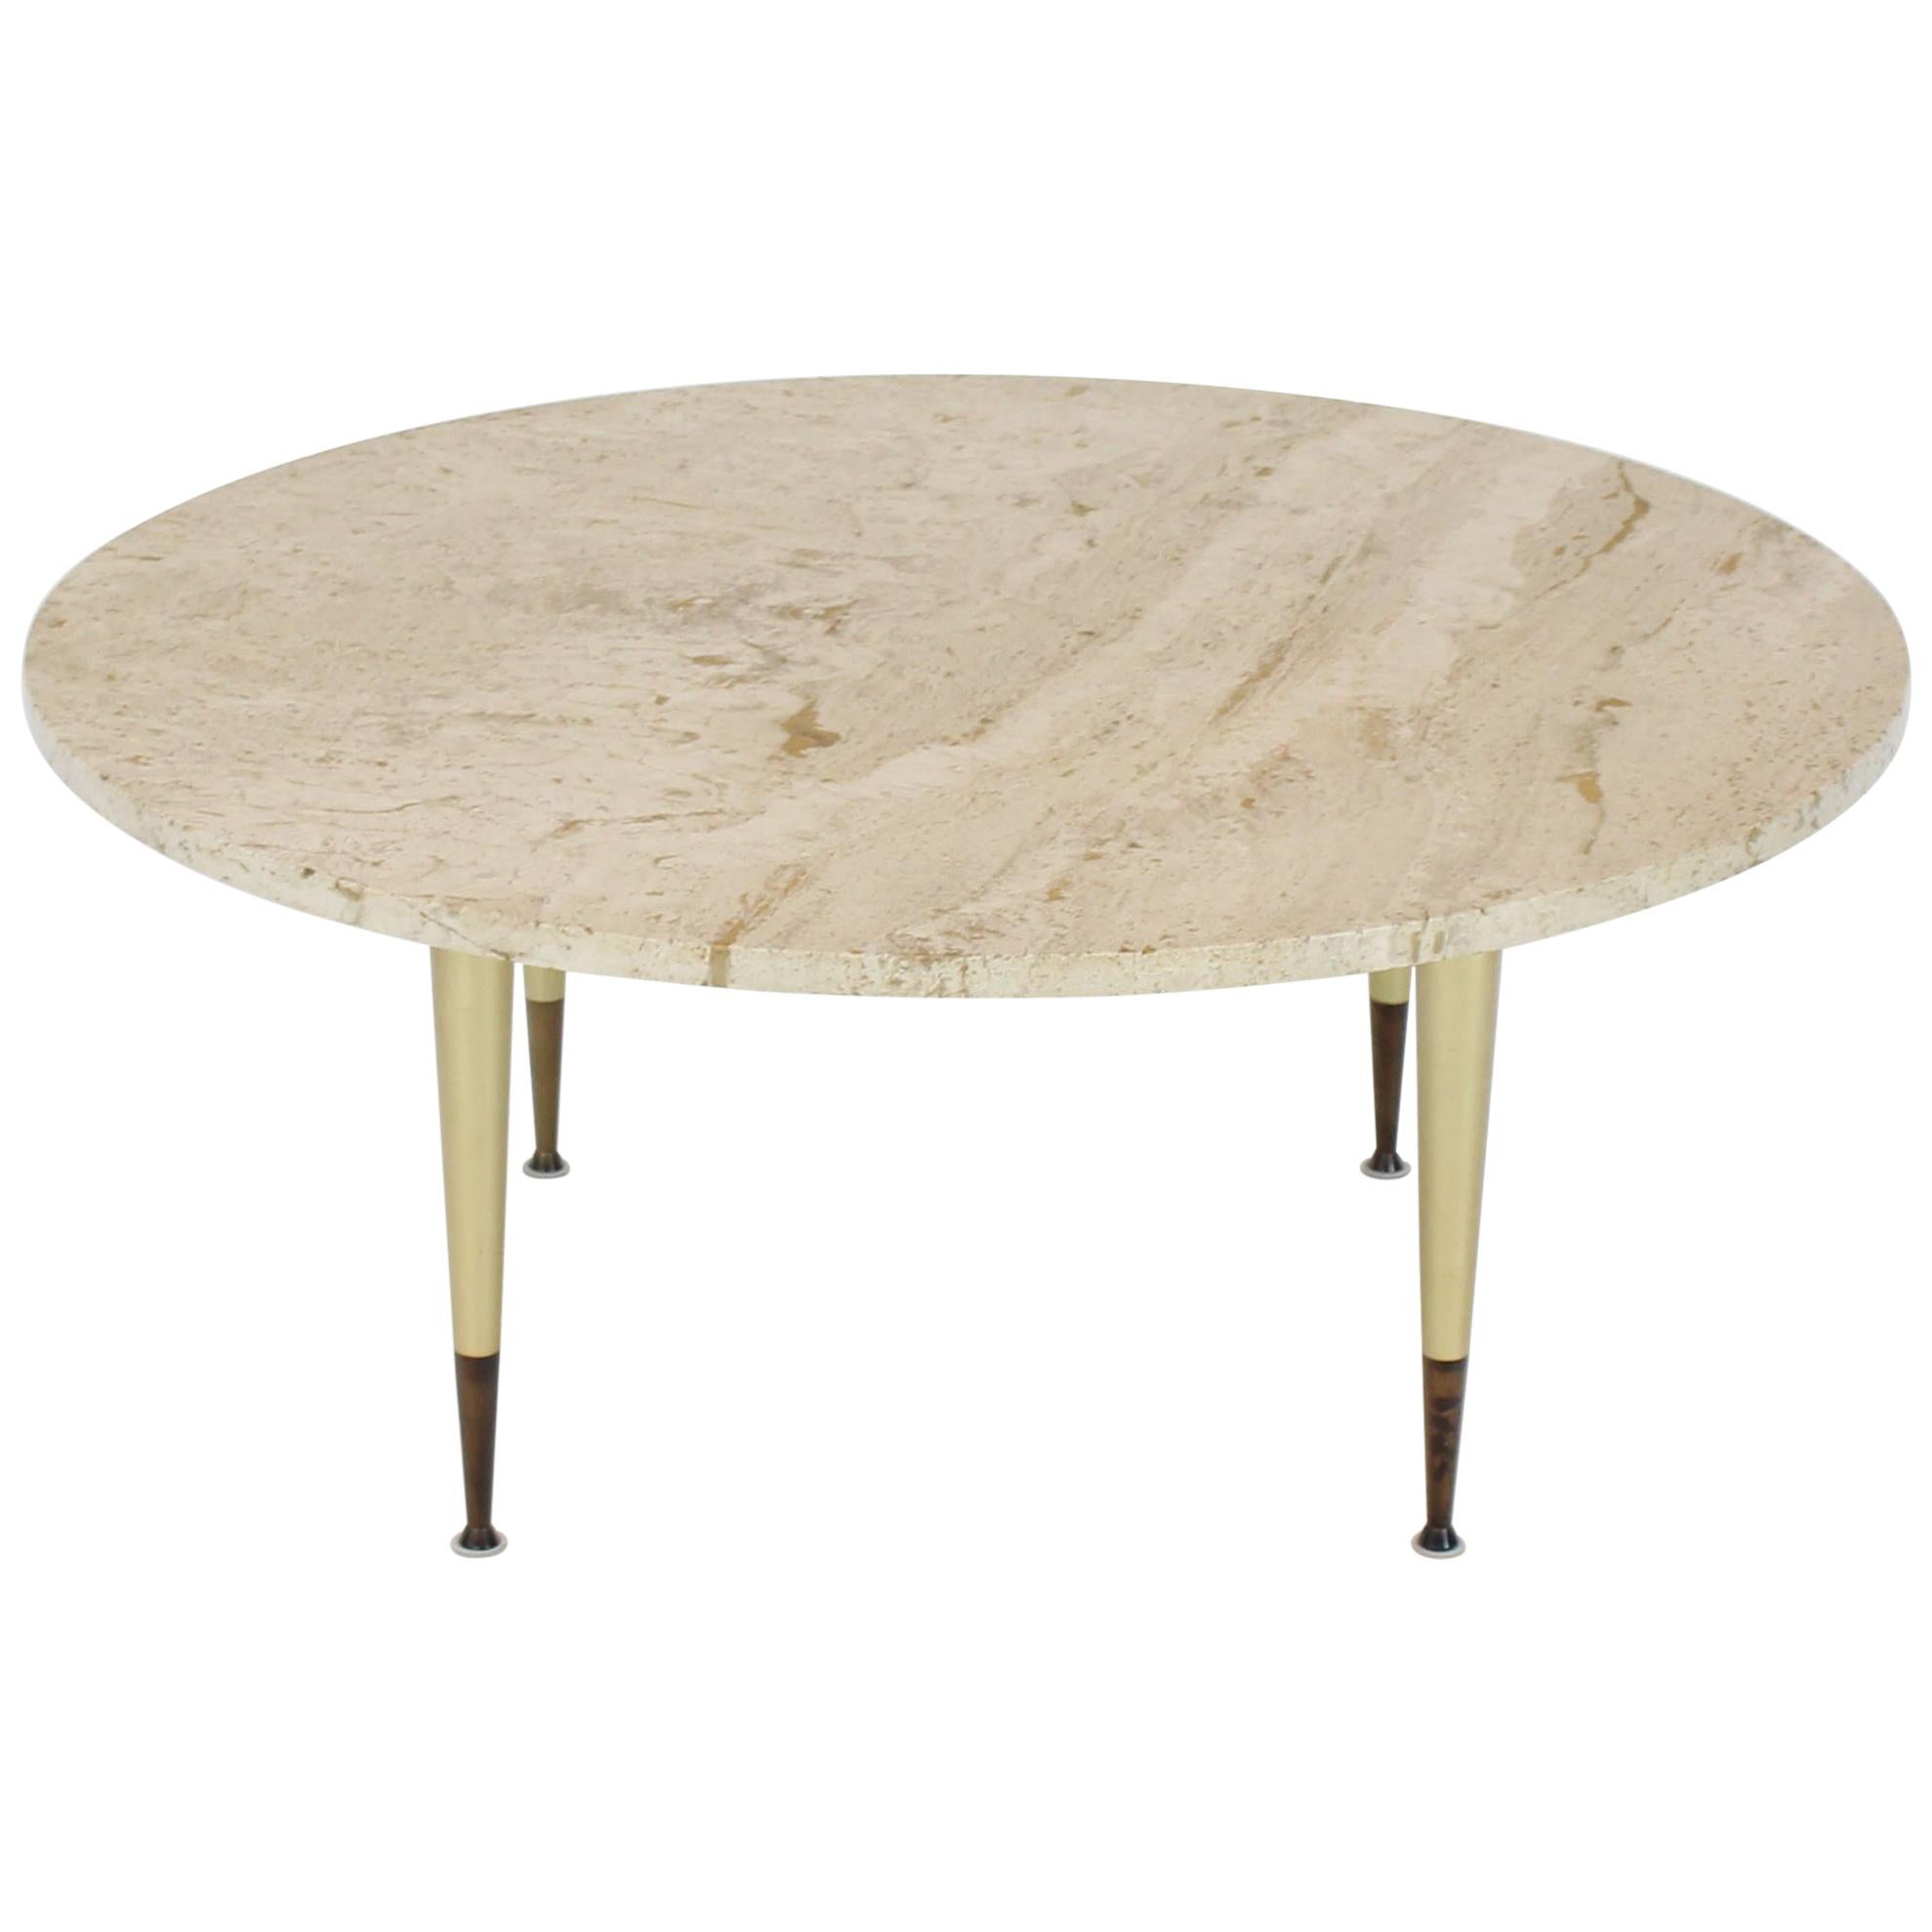 Italian Modern Round Travertine Top Coffee Table on Tapered Metal Legs Base 